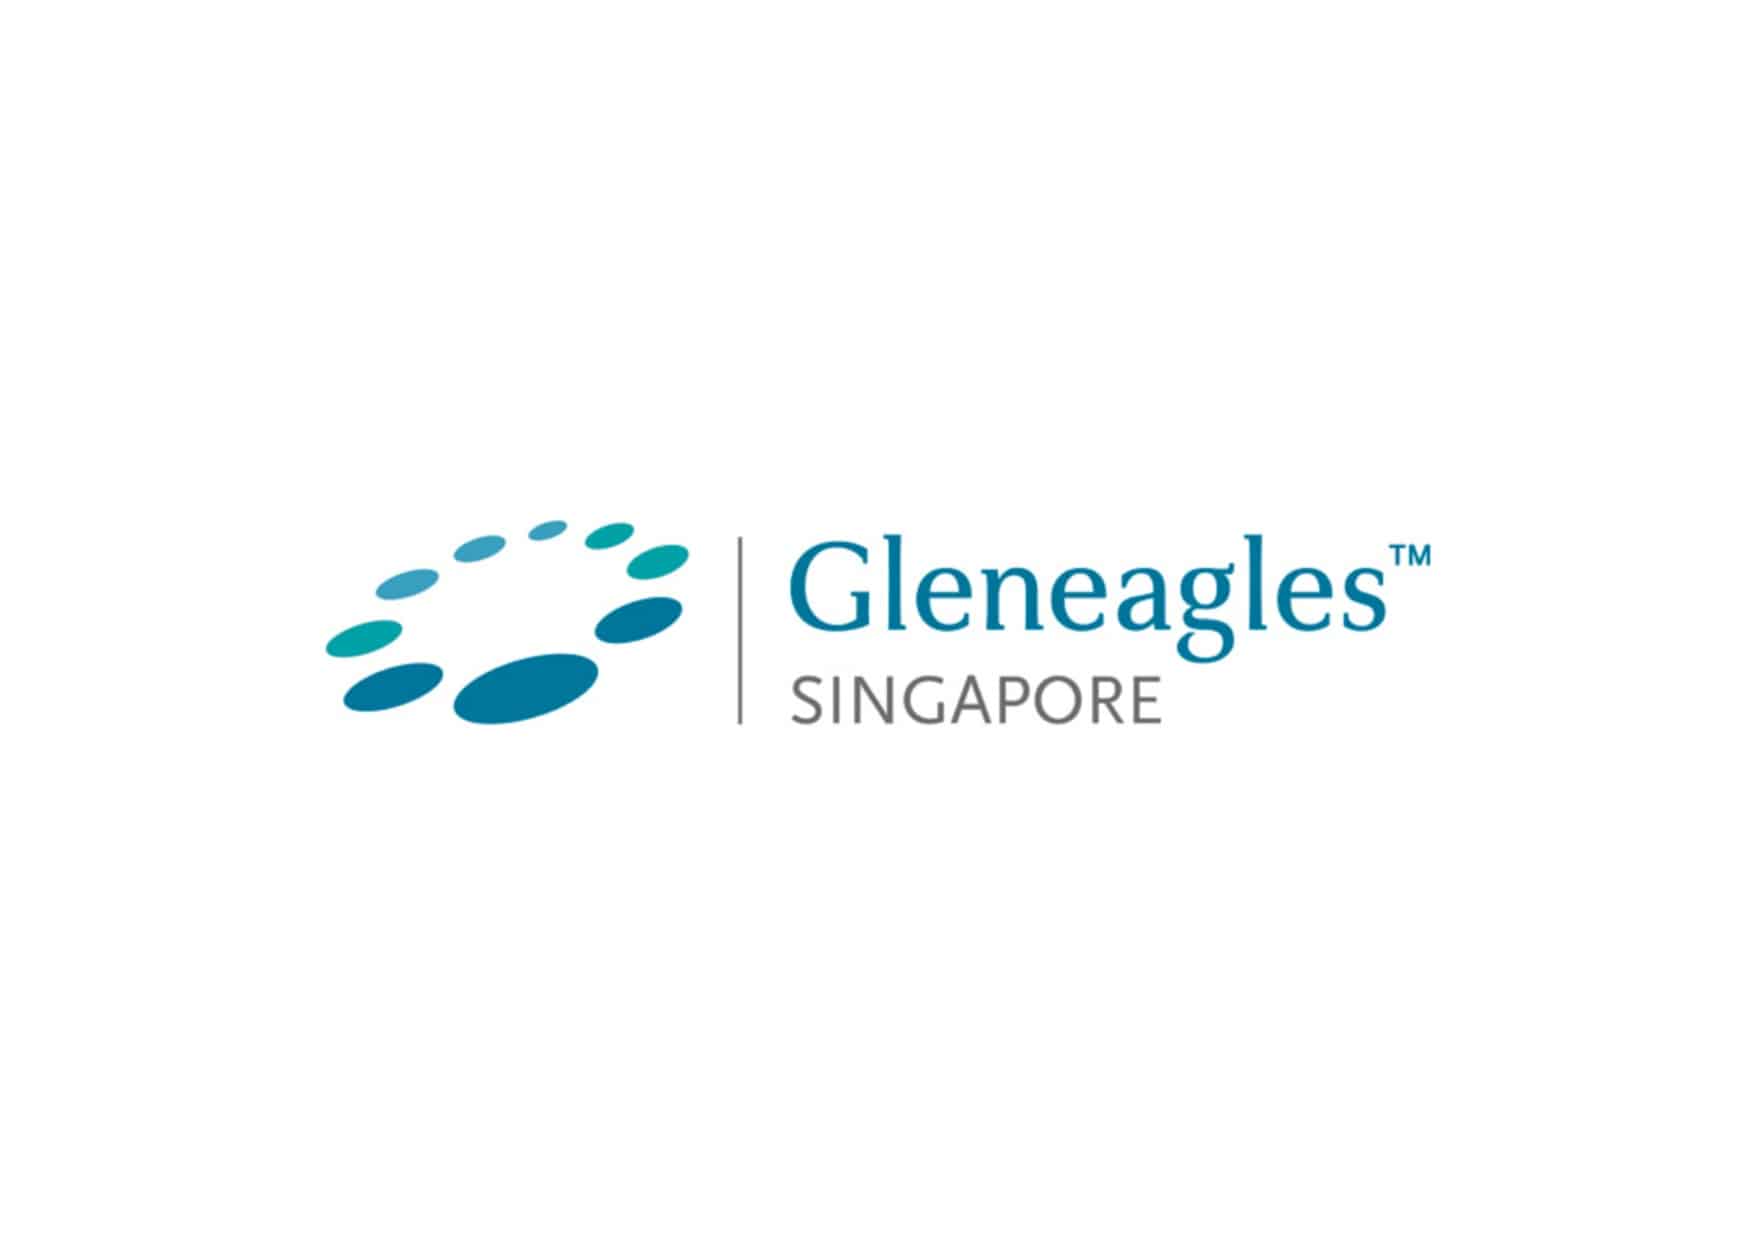 Gleneagles Hospital Career, Gleneagles Hospital Singapore Career, Career at Gleneagles Hospital, Gleneagles Career